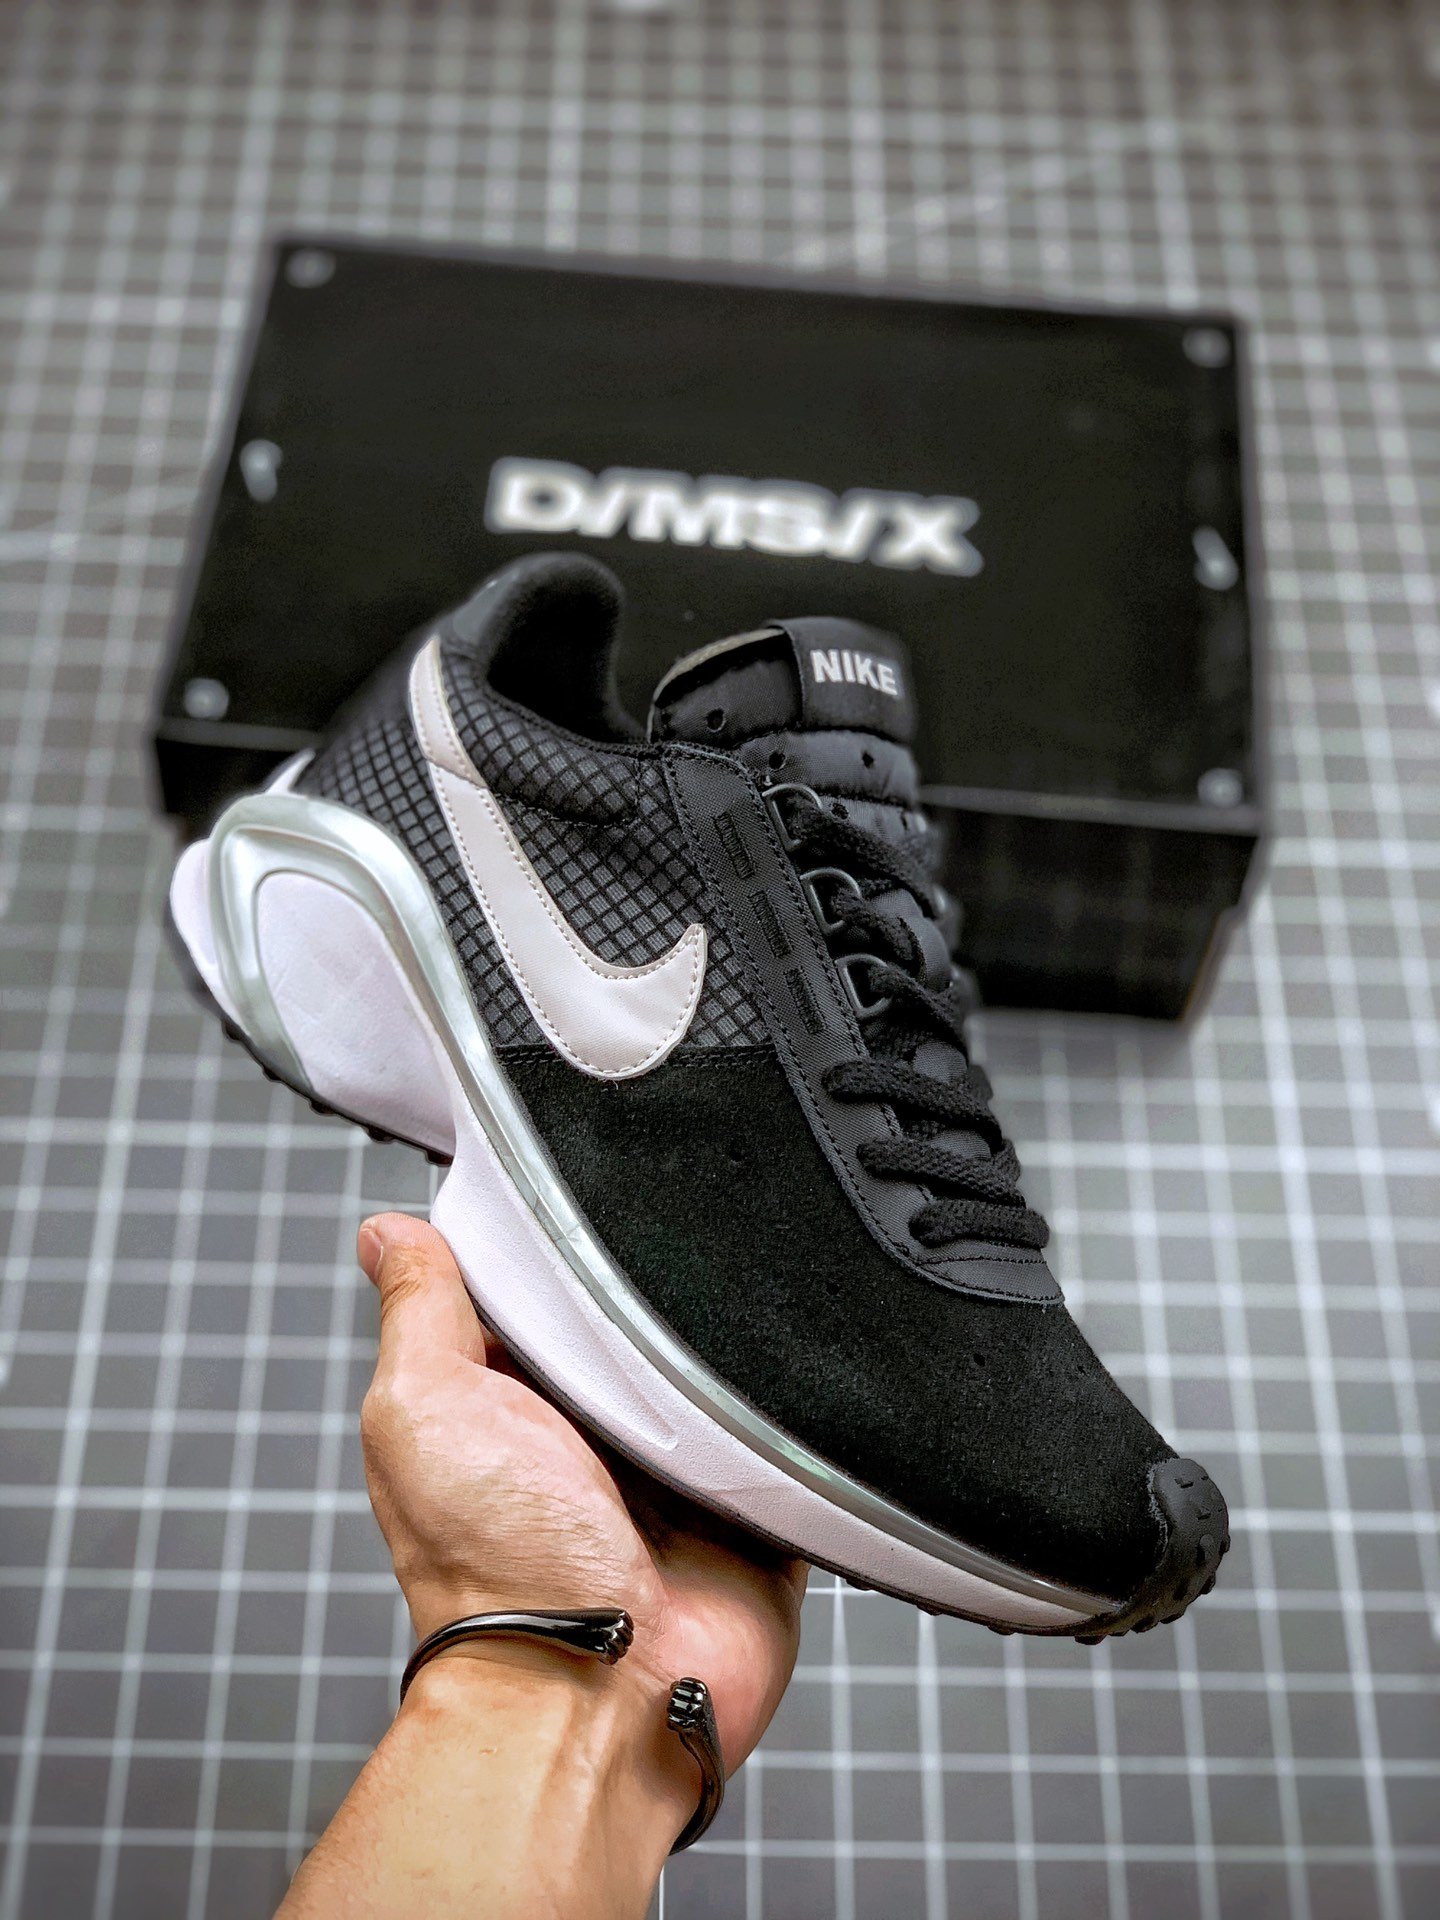 Nike D/MS/X Waffle Black Silver White Shoes